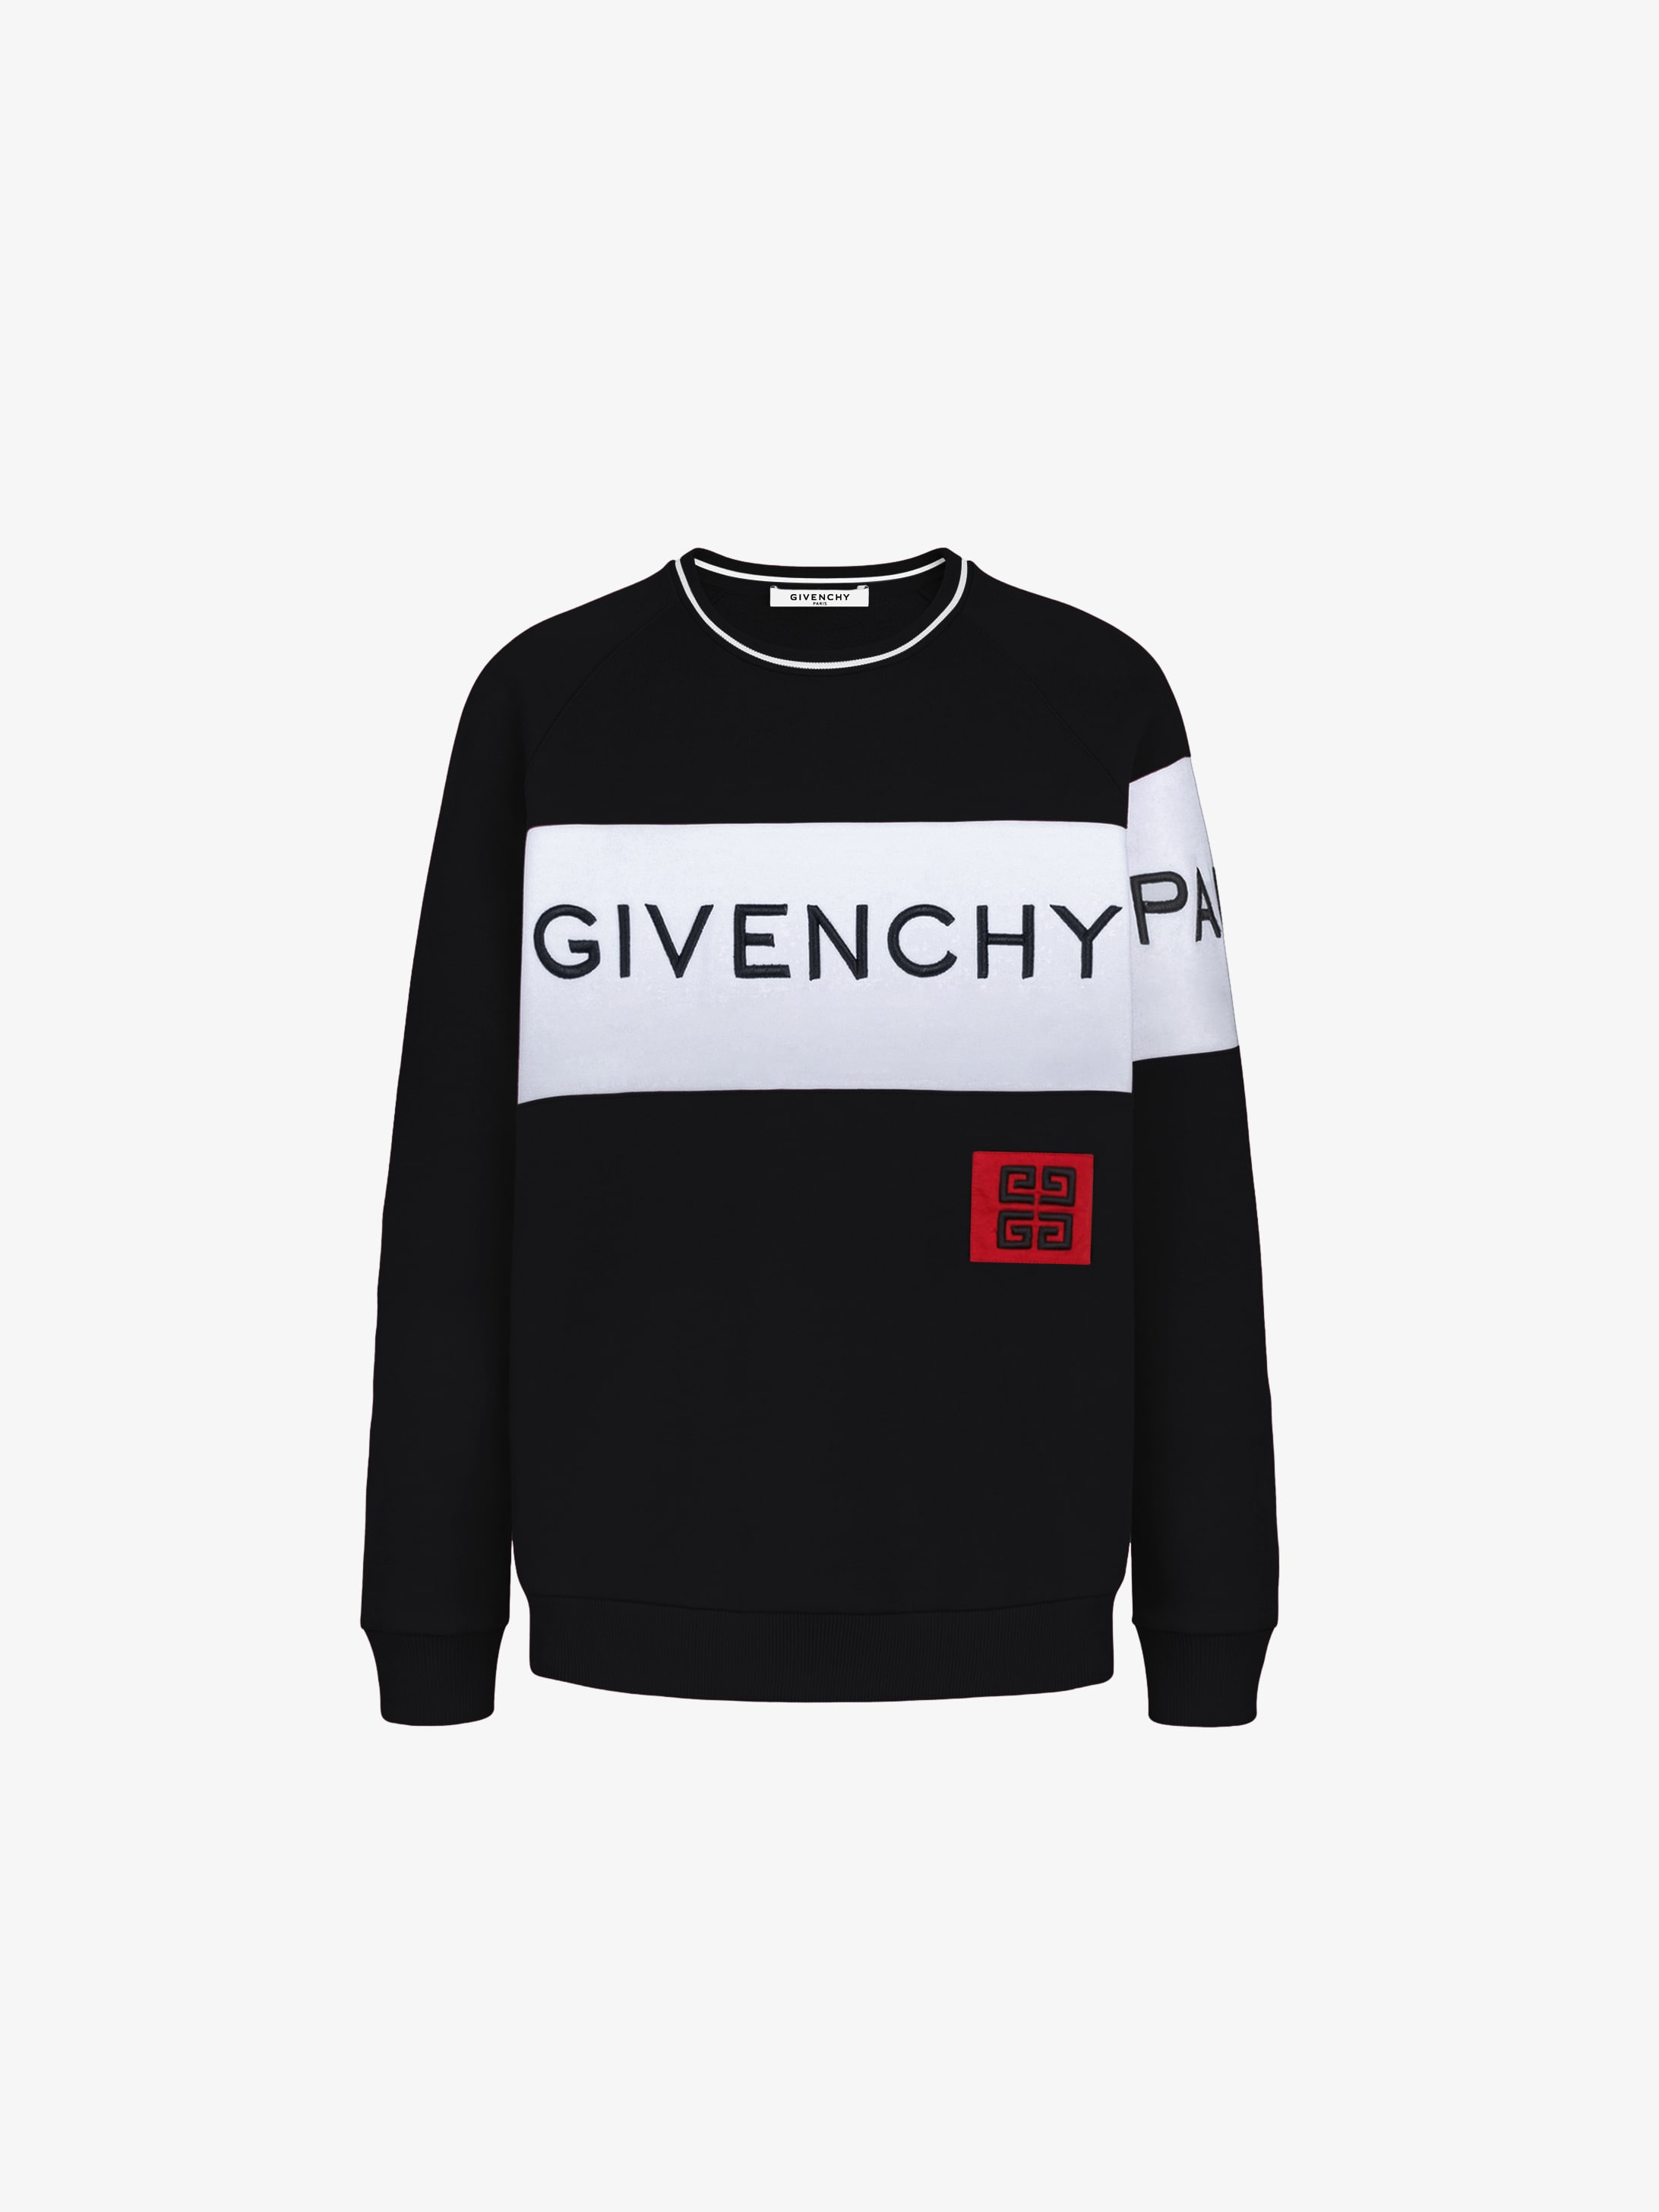 givenchy sweatshirt cost